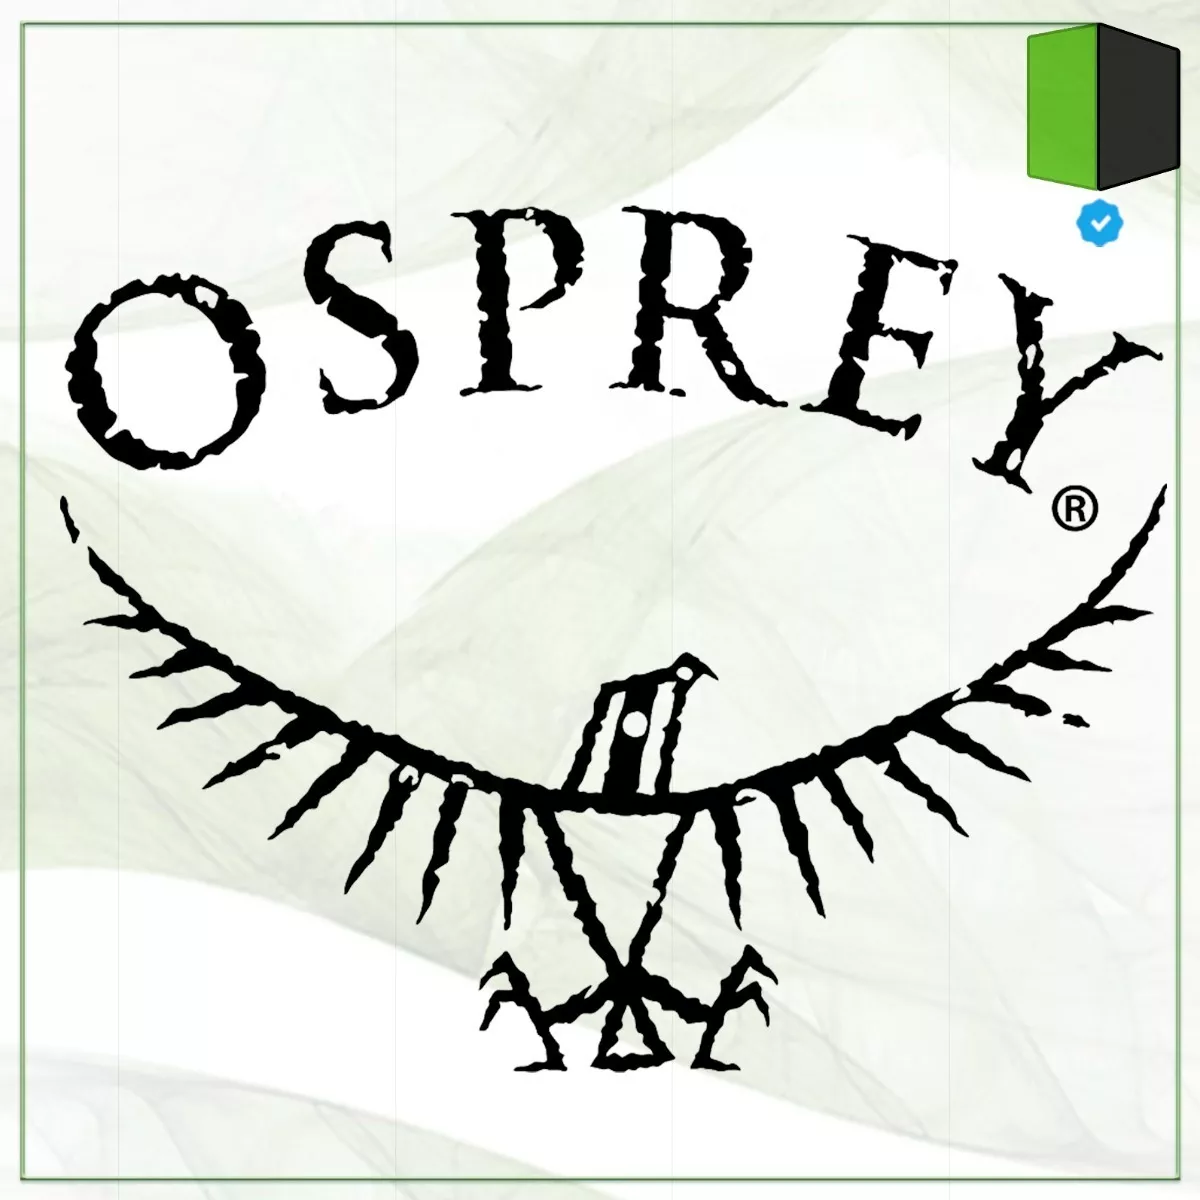 Tercera imagen para búsqueda de mochila osprey